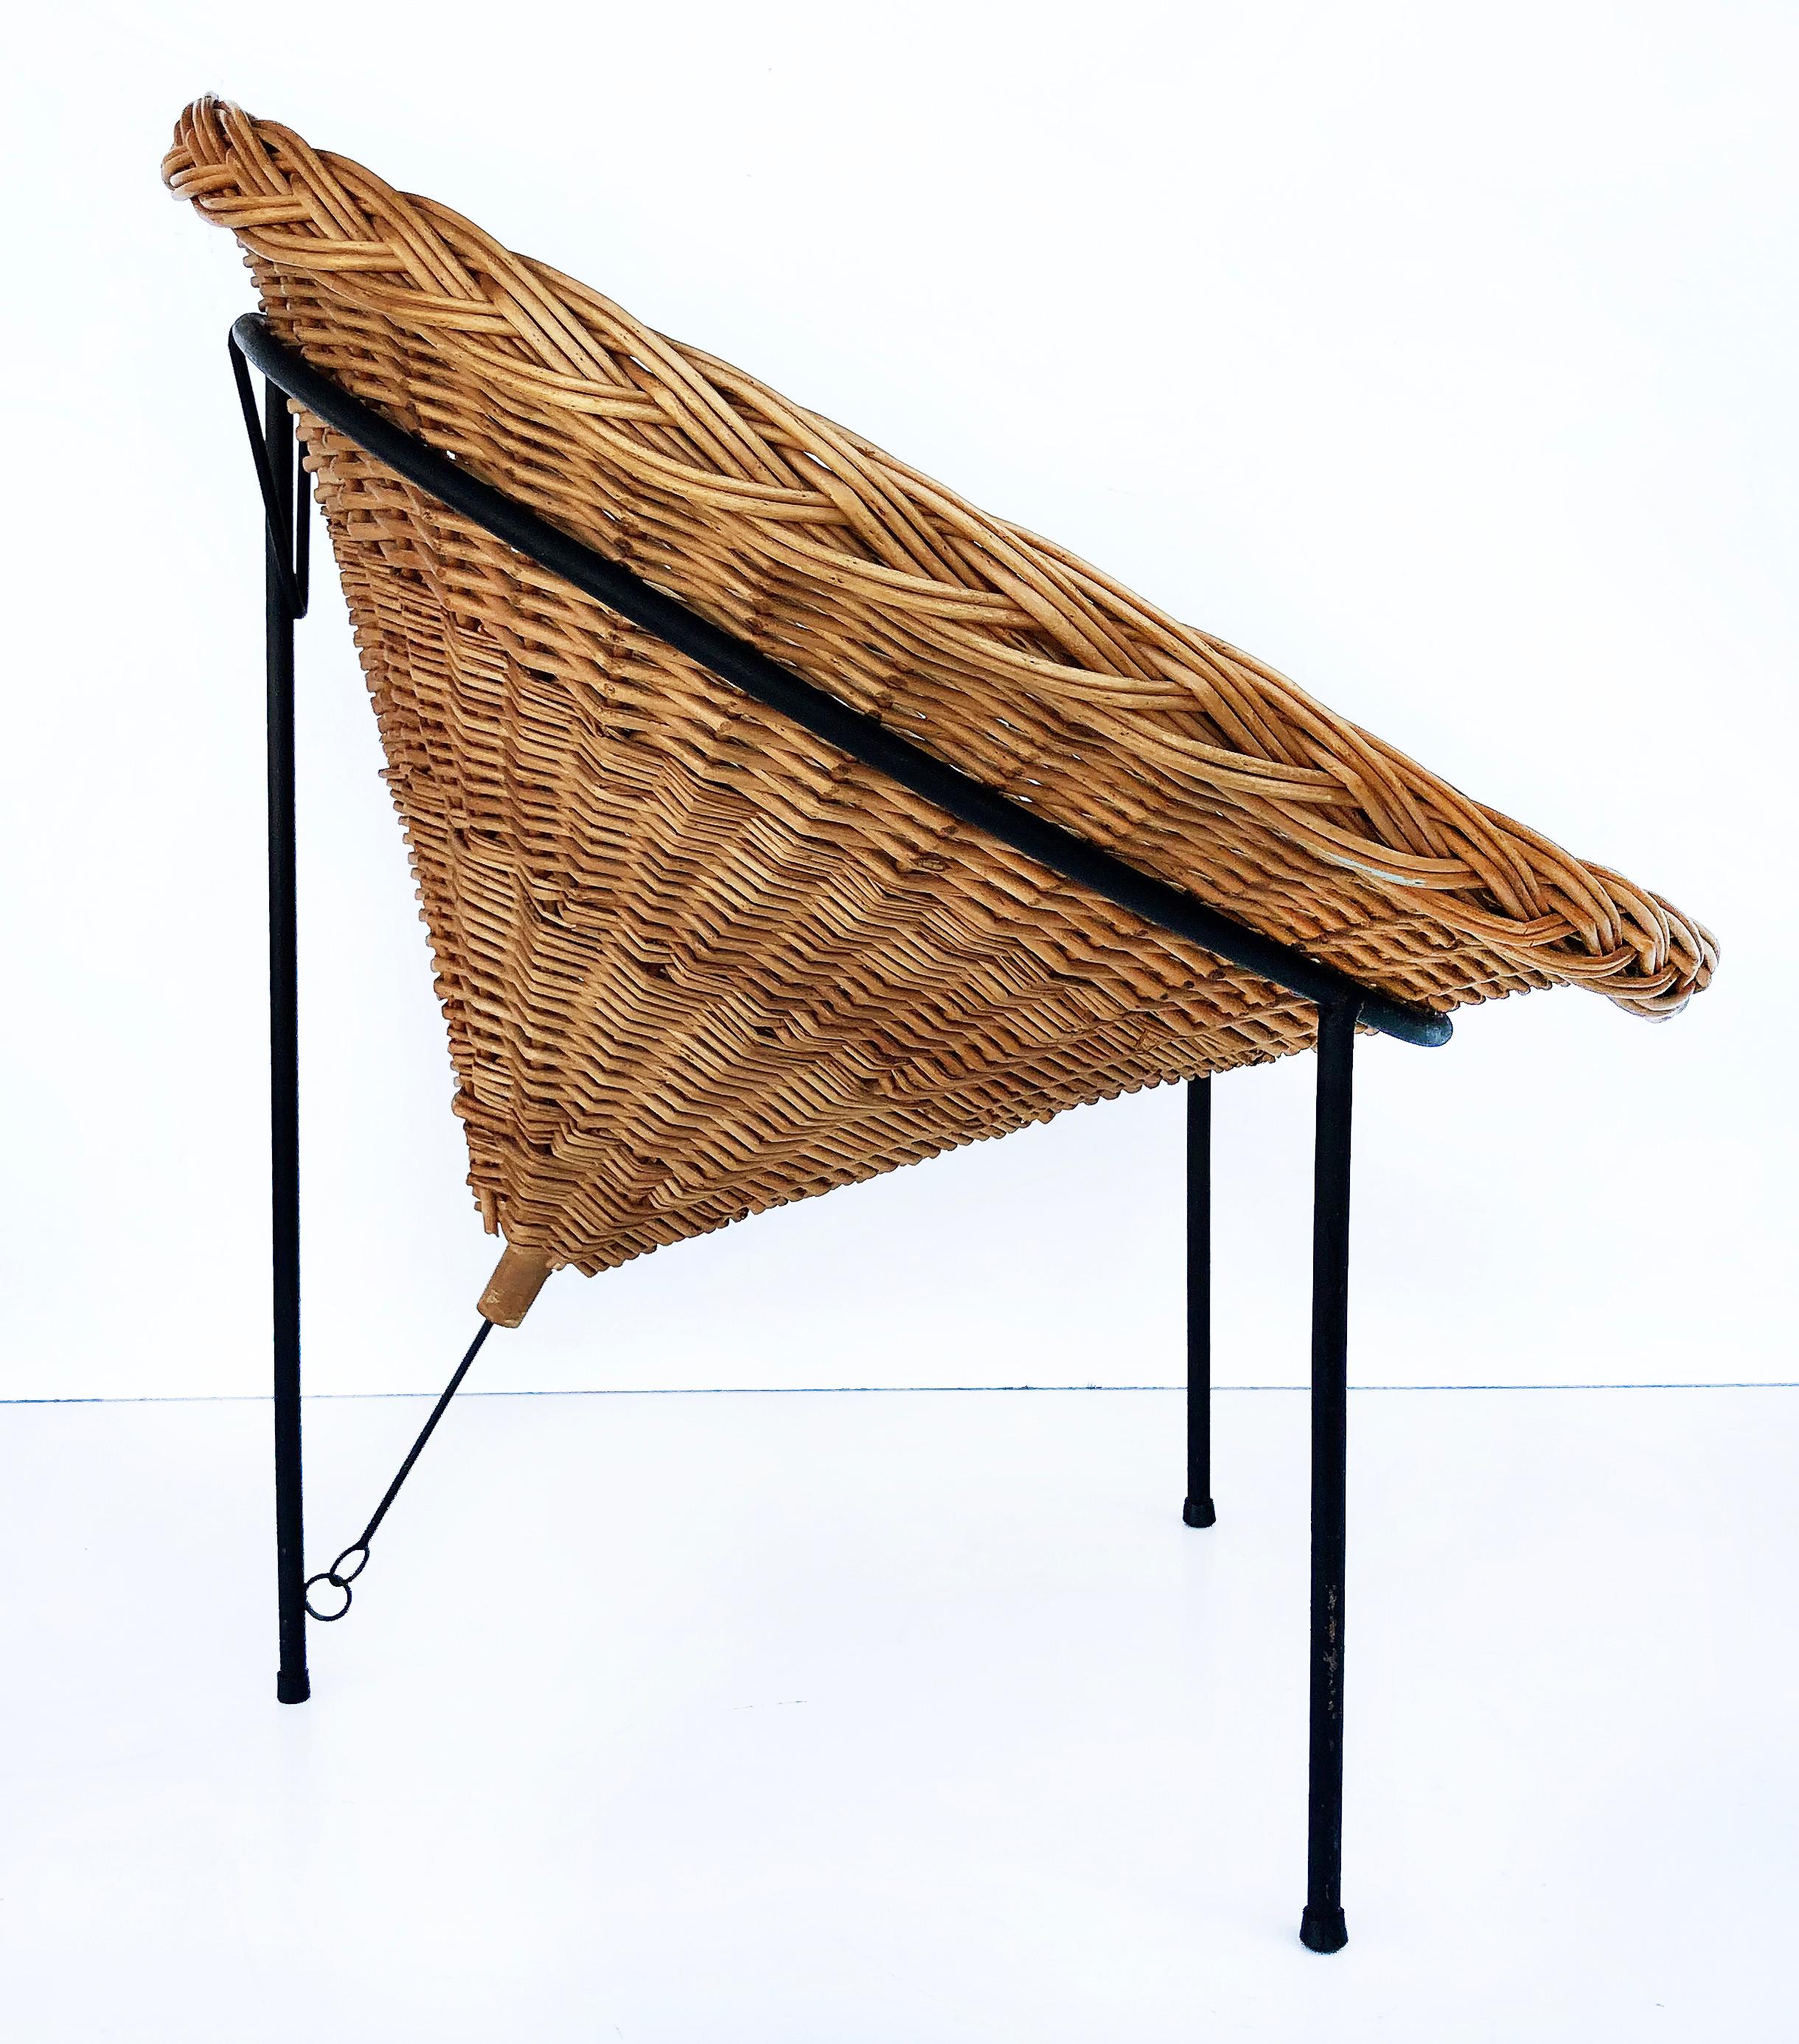 Roberto Mango '50s sunflower wicker cone basket chair


Offered is an exquisite 1950s Mid-Century Modern 